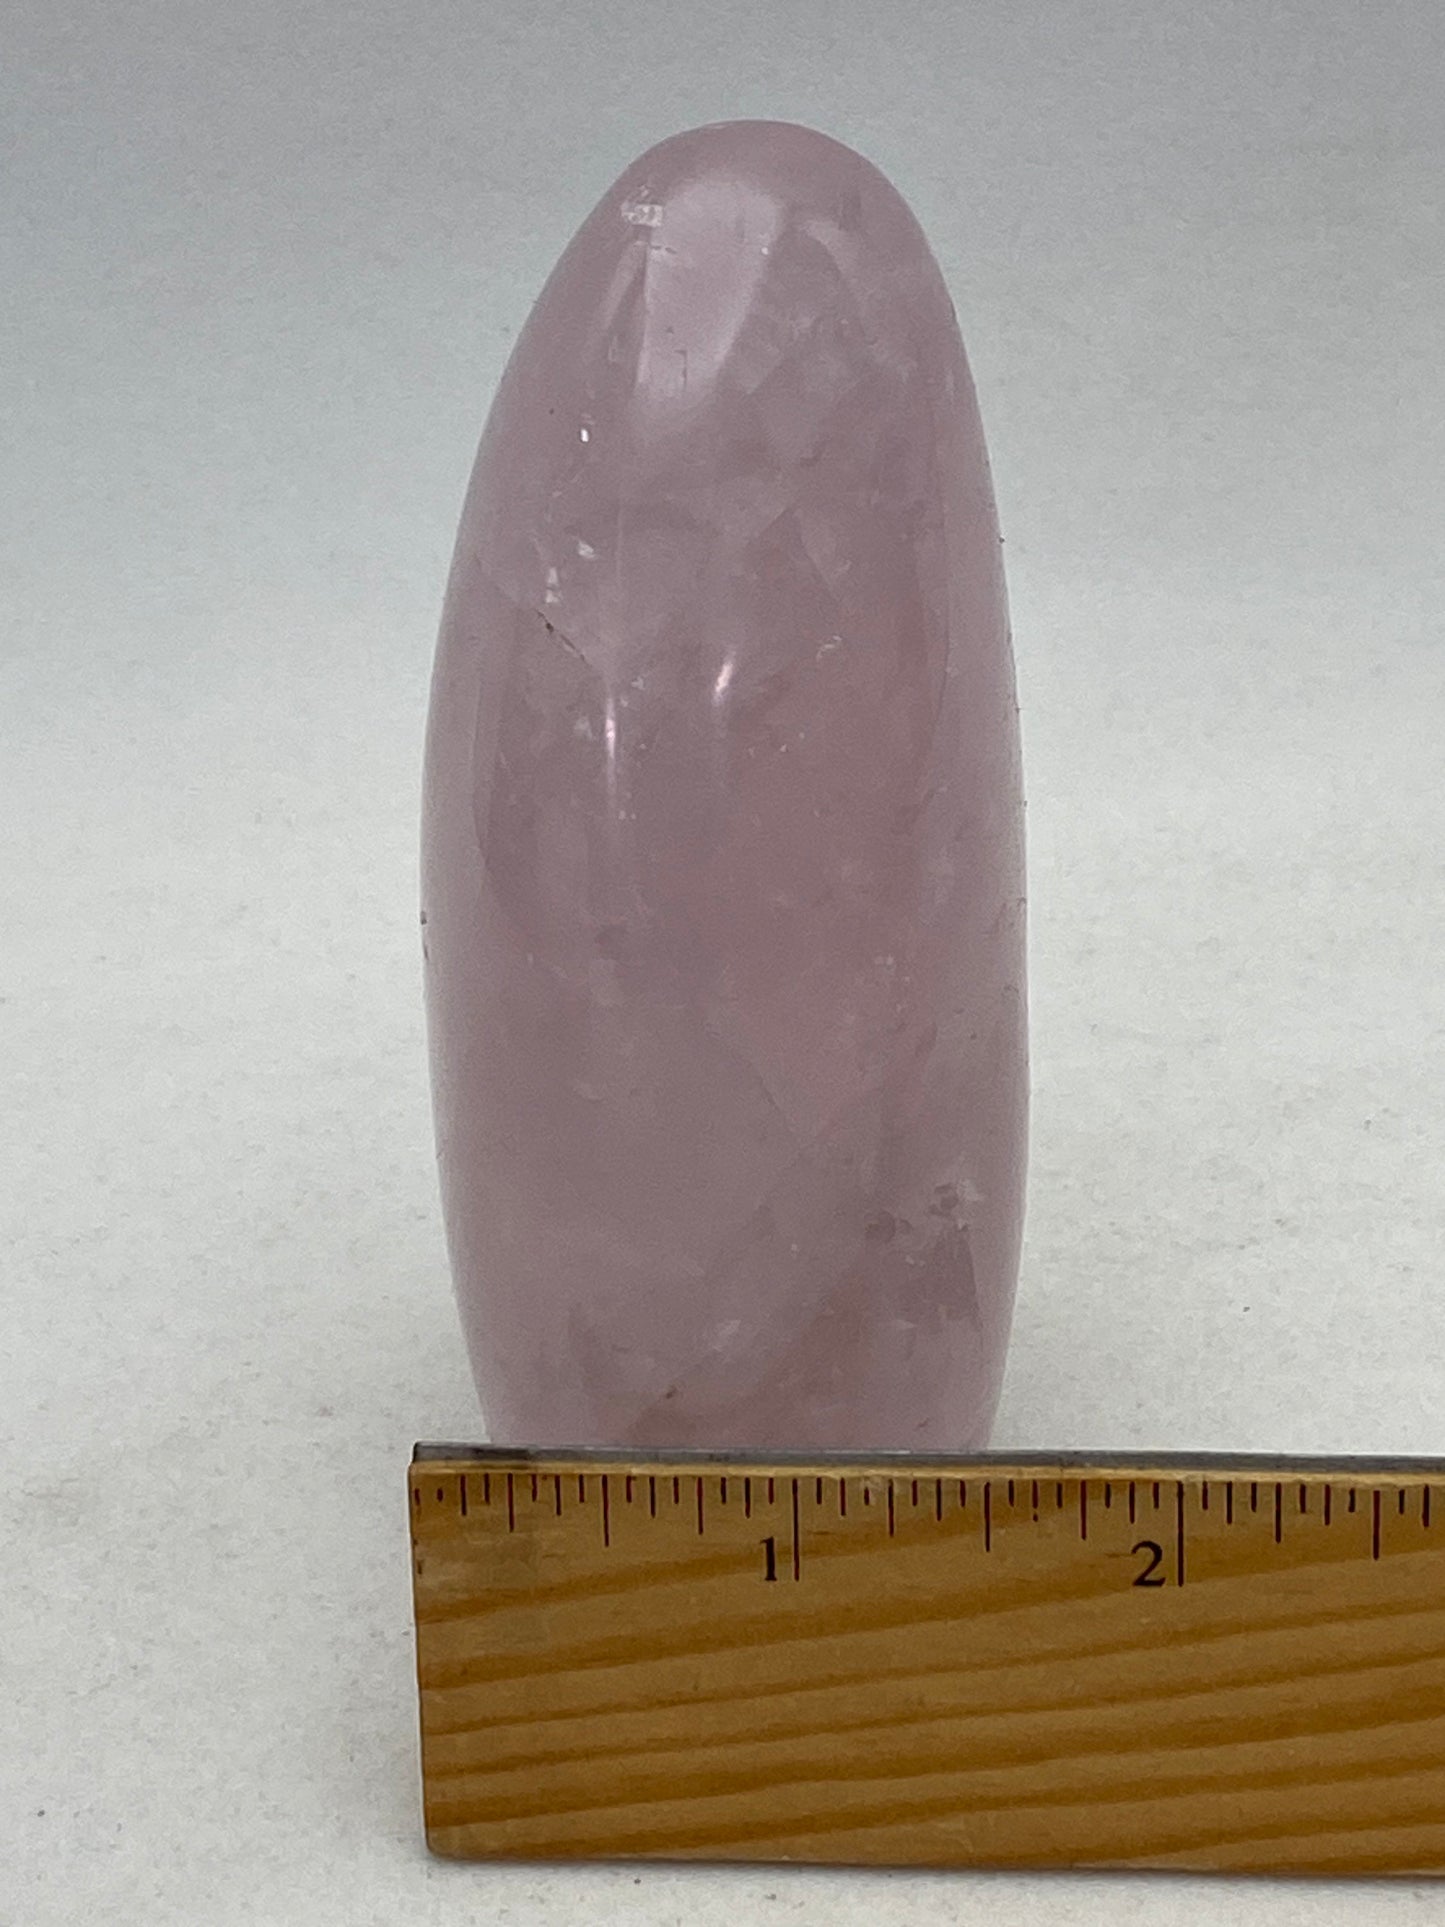 Rose quartz crystal freeform | pink quartz, free standing rock, quartz statue, polished rose quartz, standing rose quartz, pink crystal